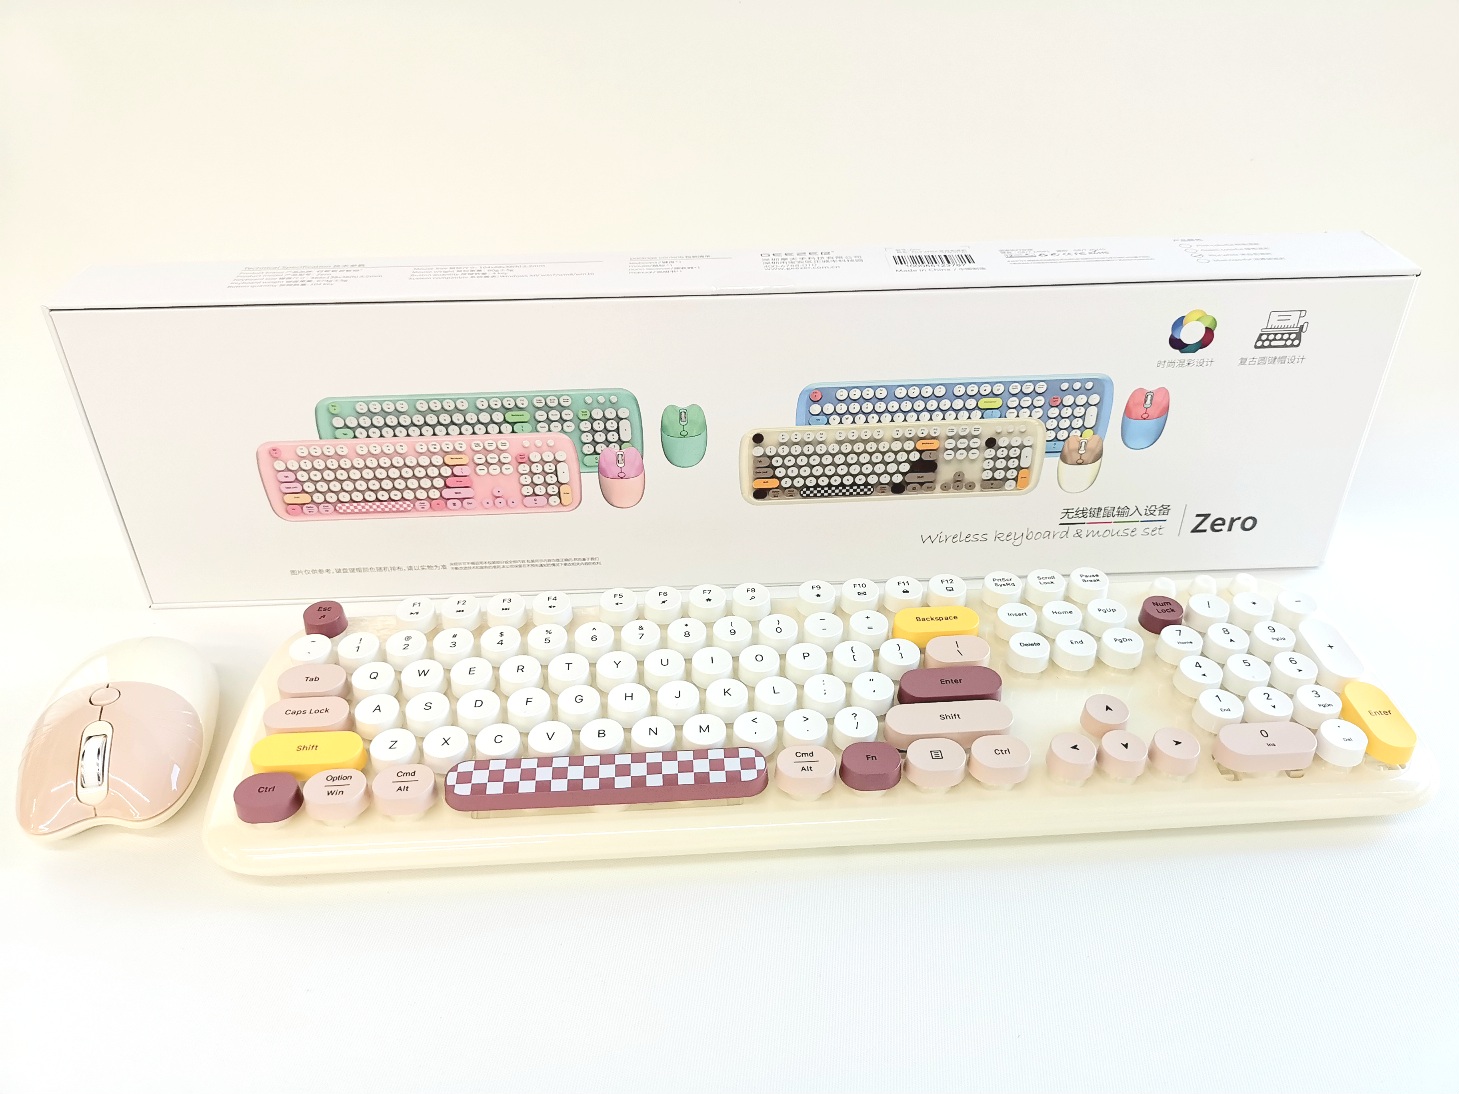 Mofii Geezer Zero Wireless Keyboard & Mouse